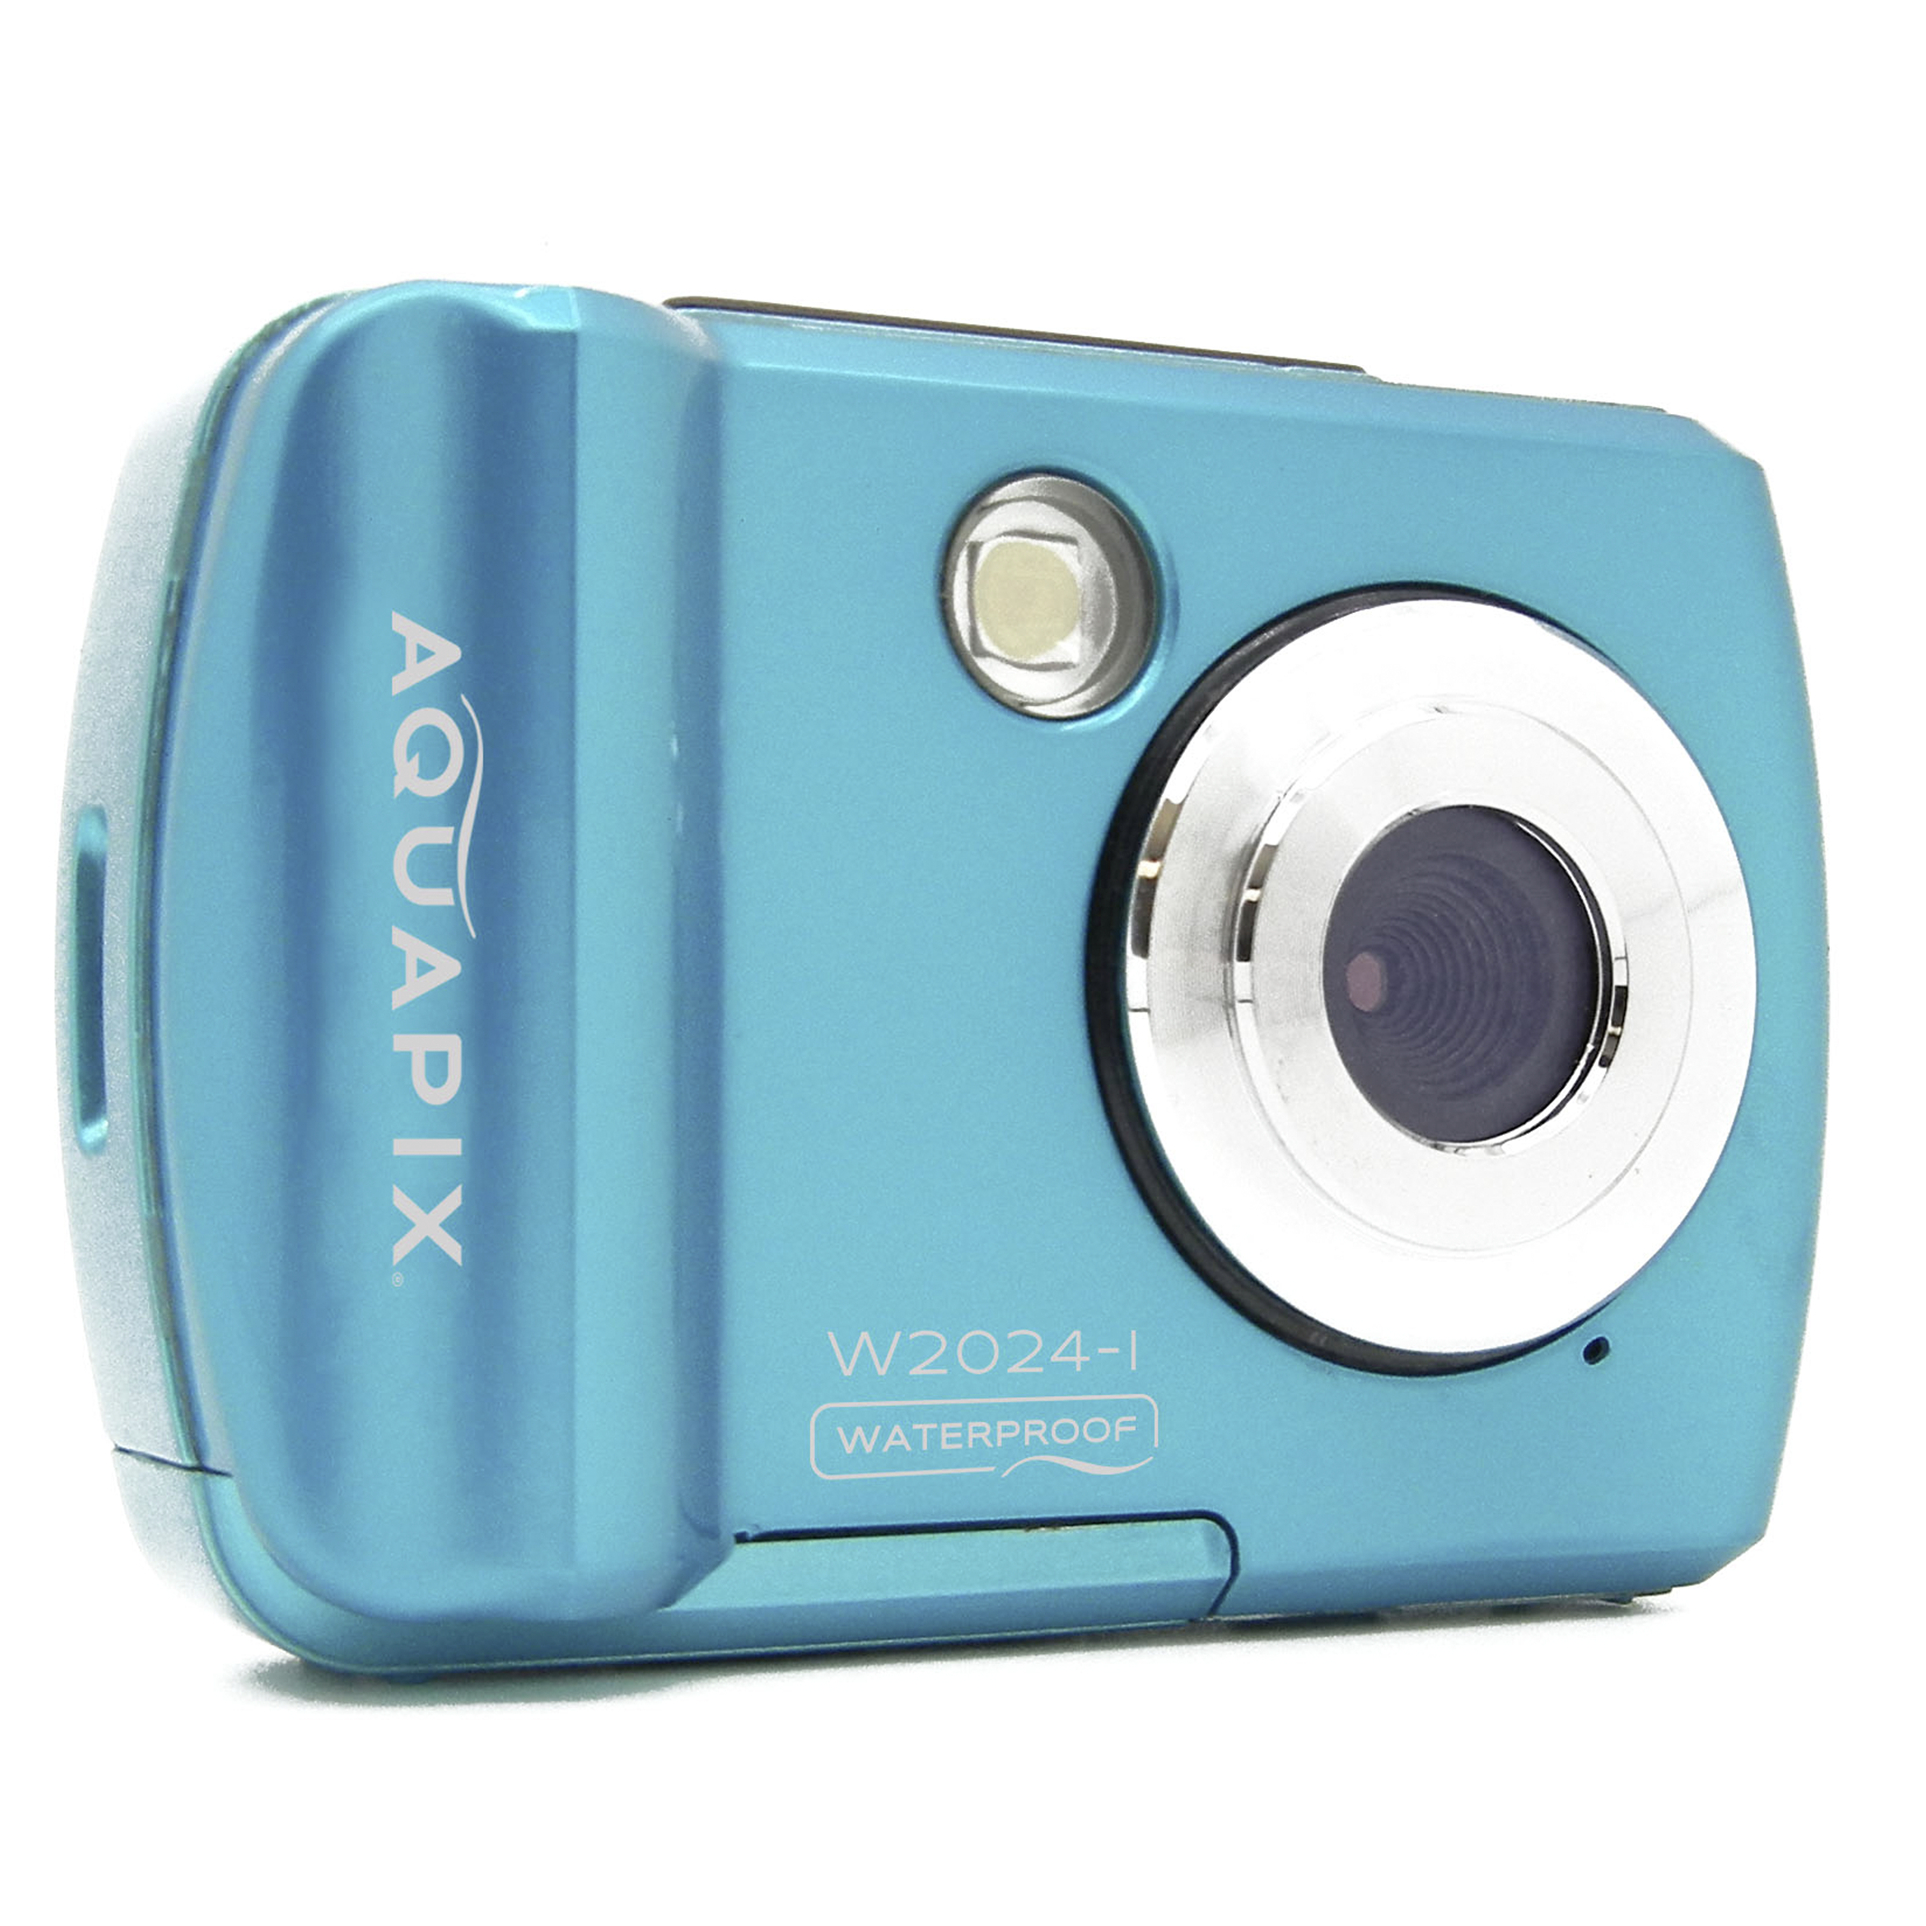 opt. Farb-Display Zoom, blau, Splash Easypix , W2024 Aquapix Unterwasserkamera k.A. EASYPIX